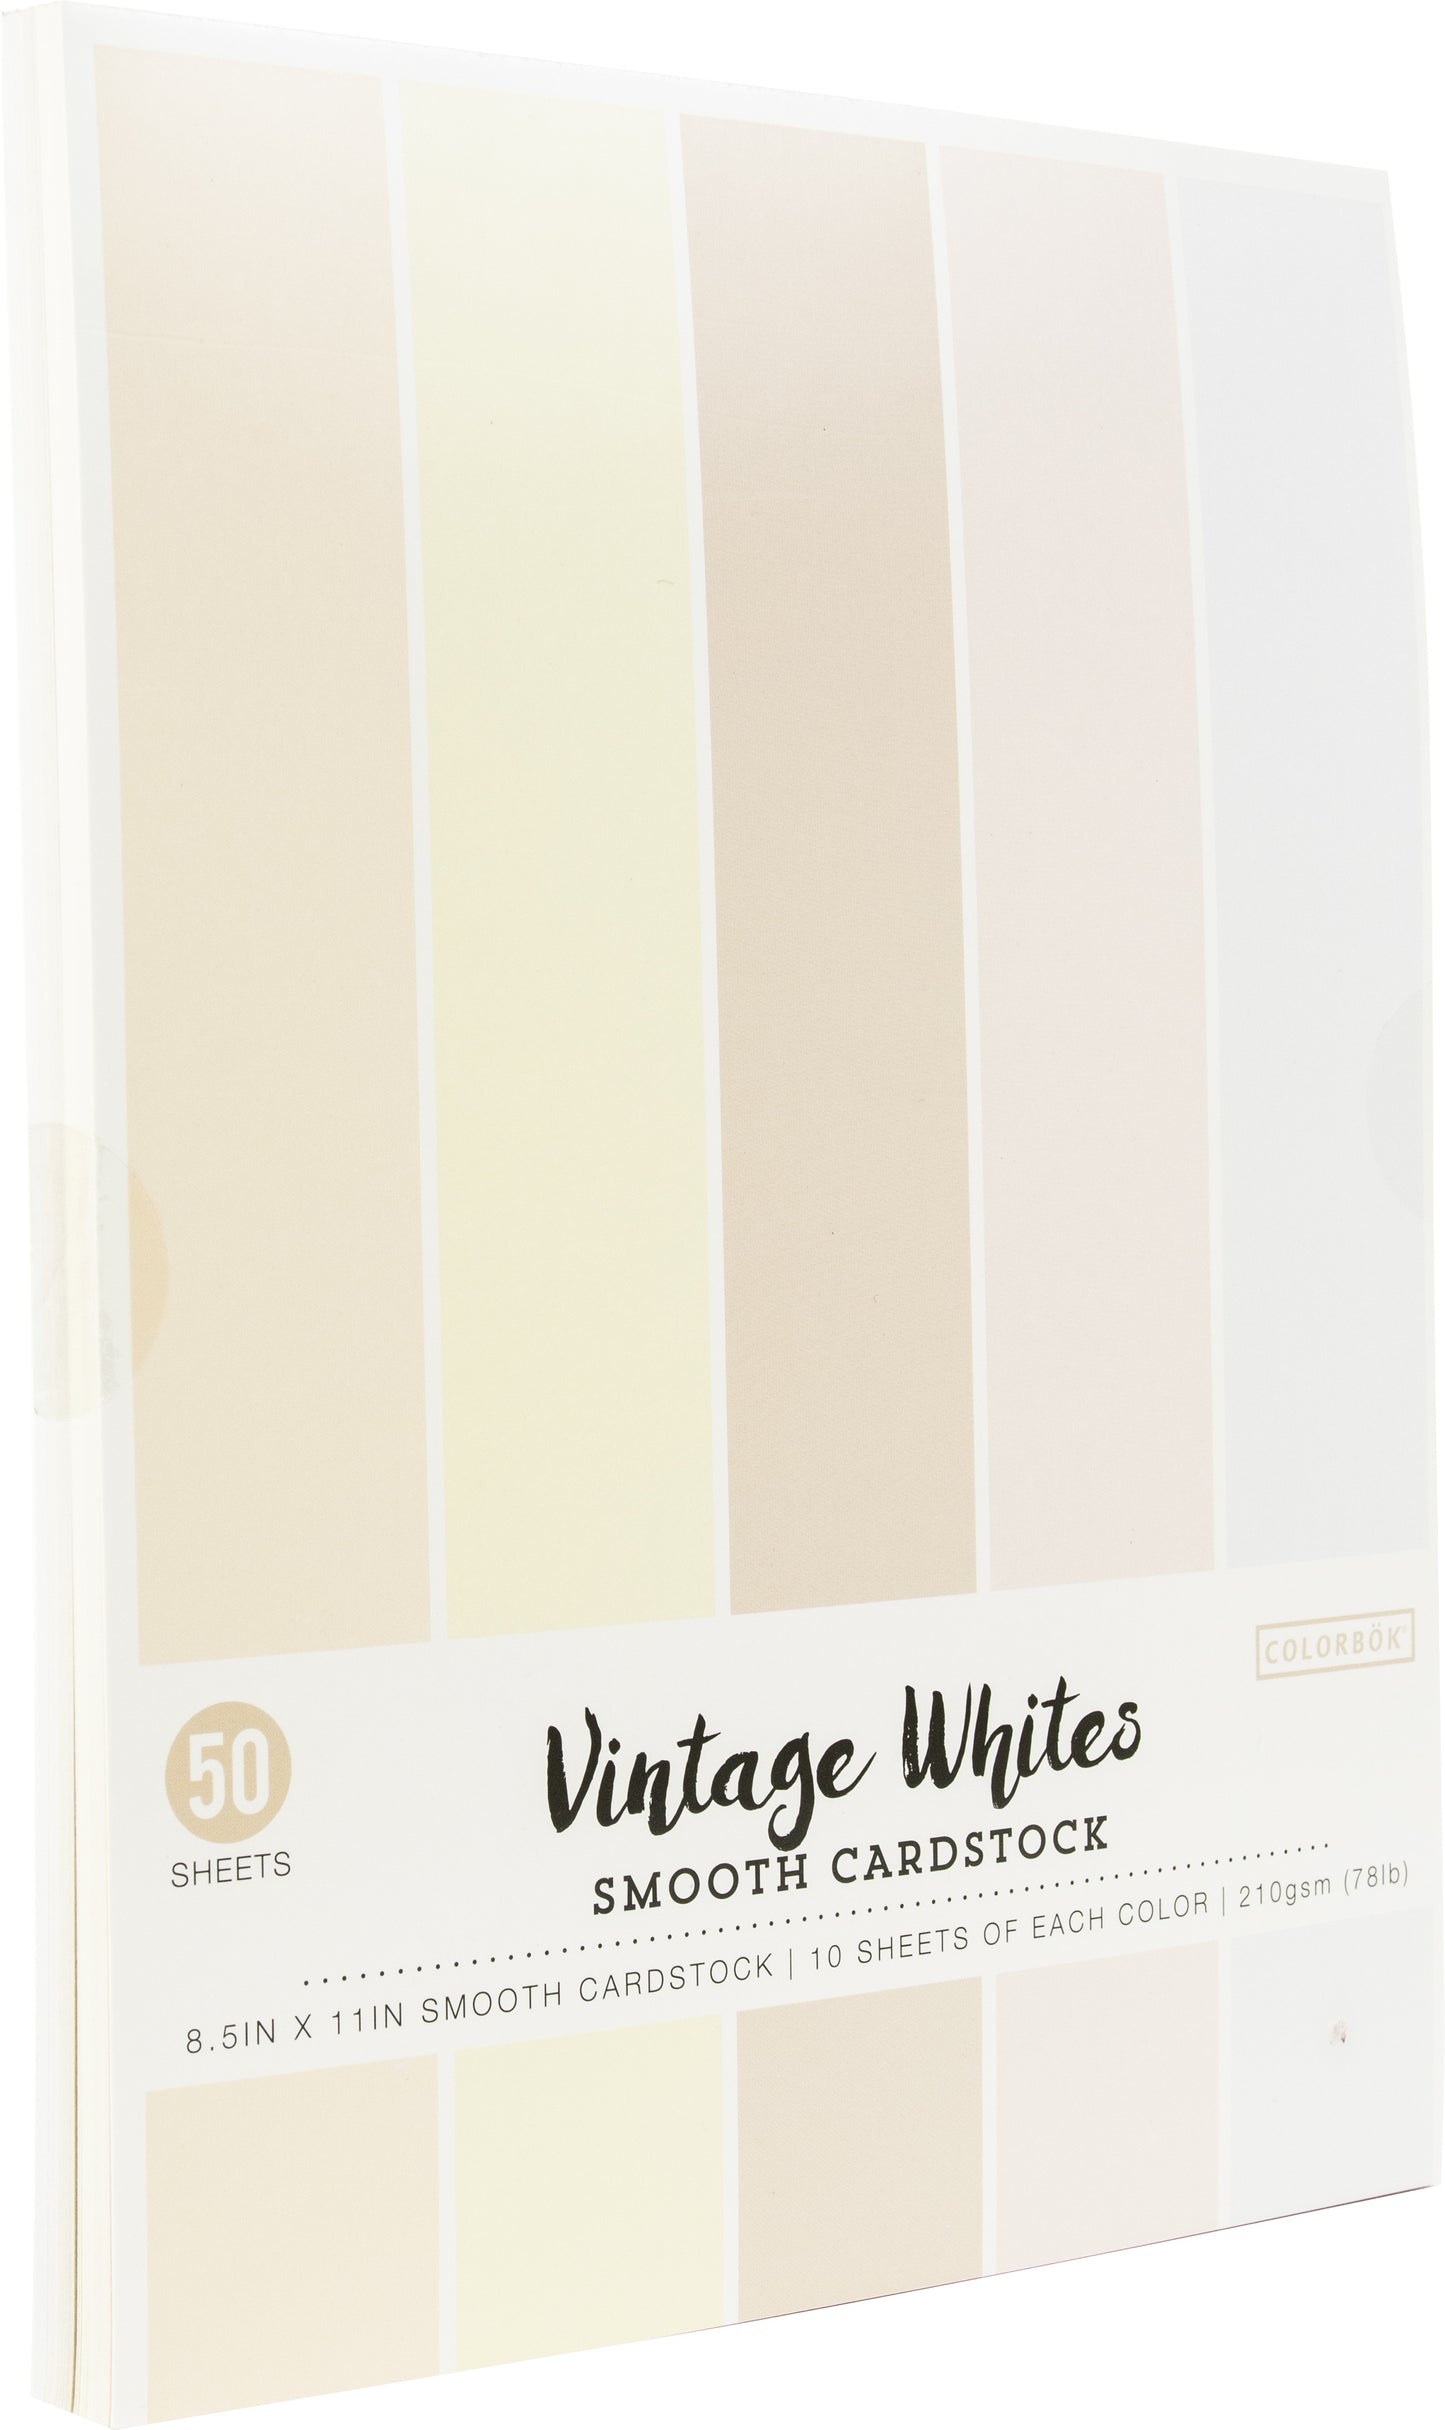 Colorbok 78lb Smooth Cardstock 8.5"X11" 50/Pkg-Vintage Whites, 5 Colors/10 Each